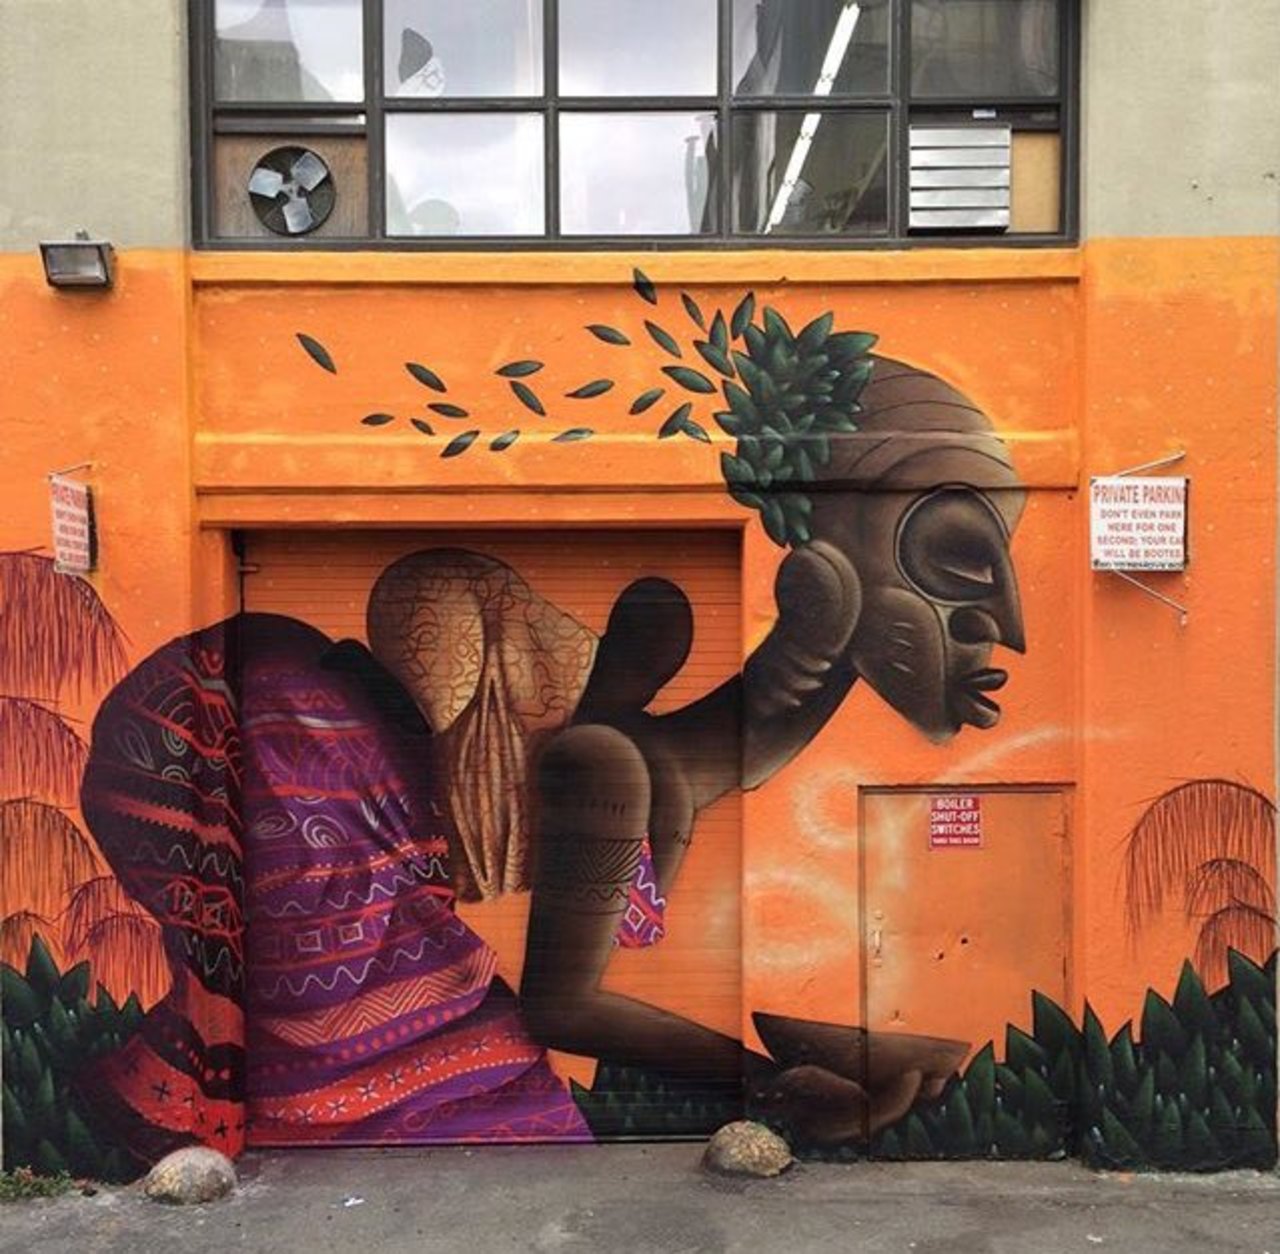 RT @danielchavez81: New Street Art by Alexandre Keto in NYC 

#art #graffiti #mural #streetart https://t.co/l9NEU6xqRQ